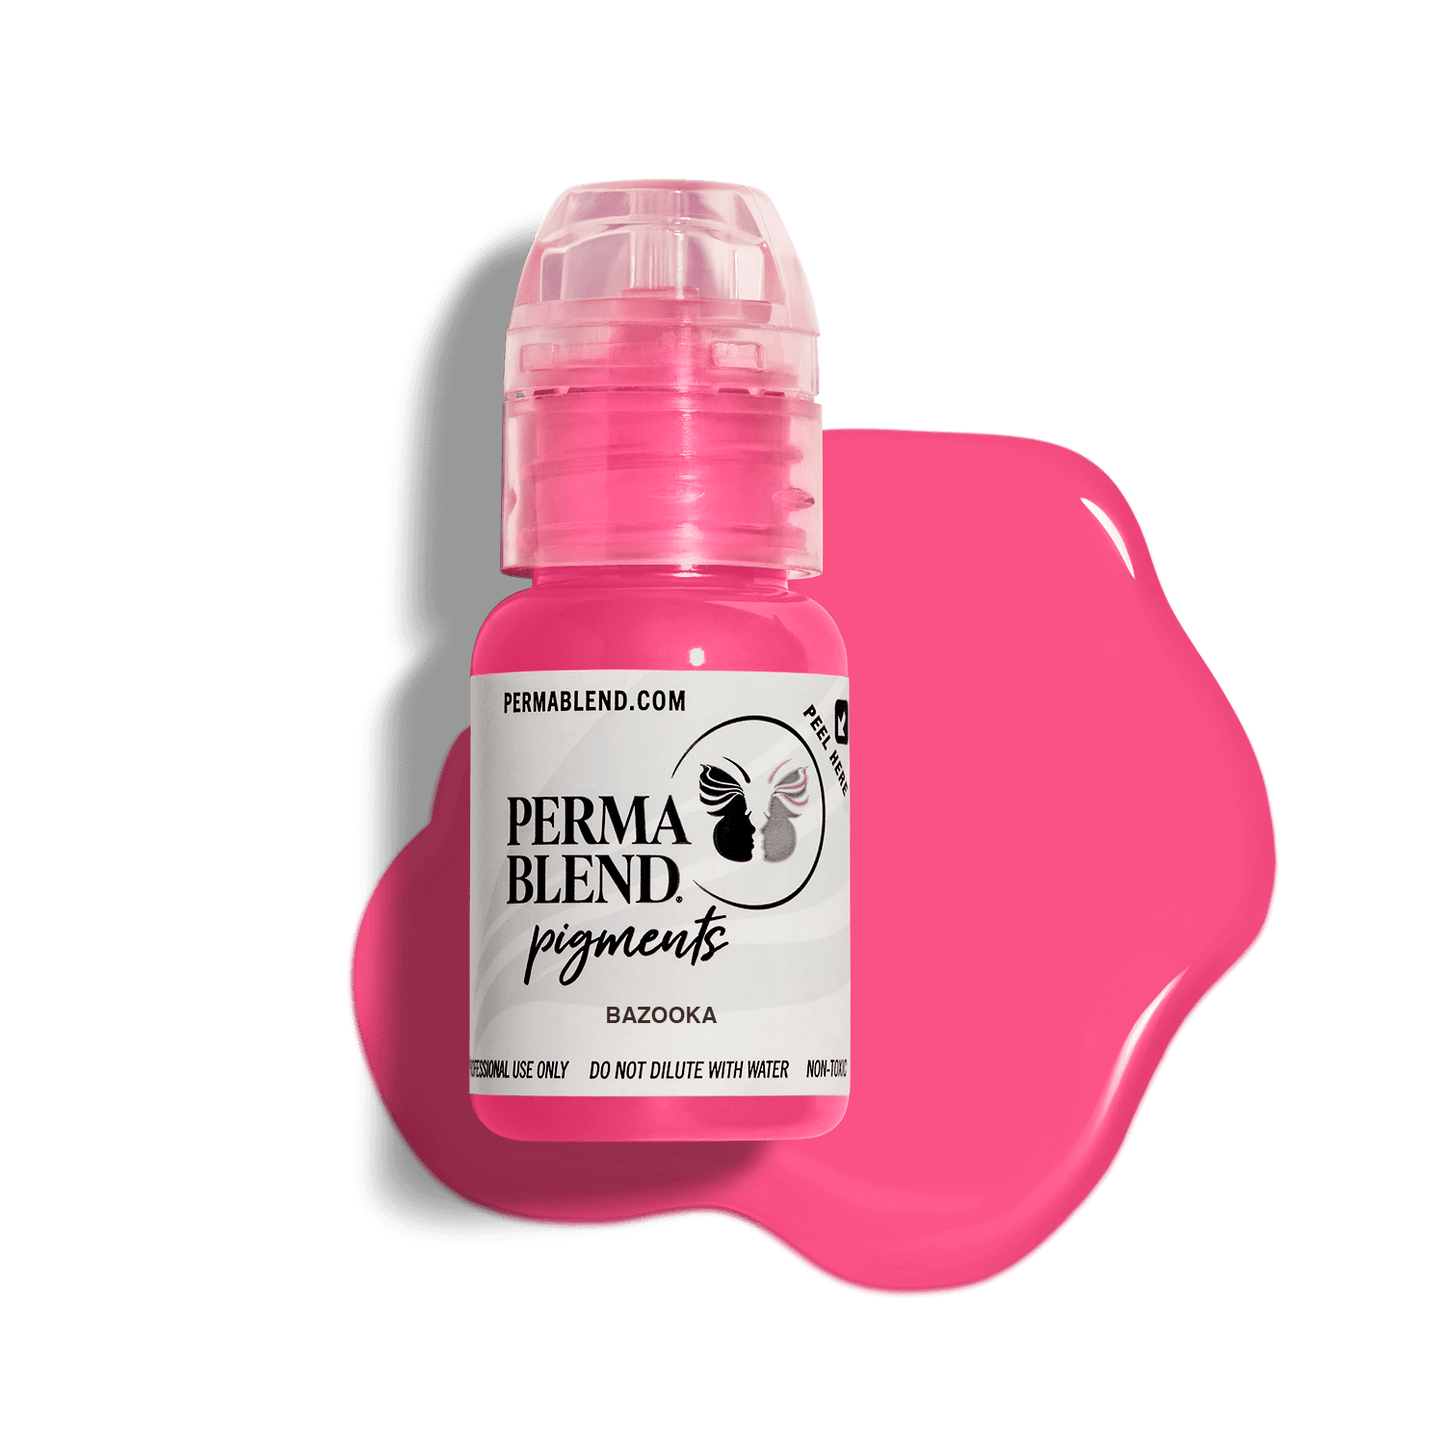 Perma Blend Pigments - Sultry Lip Bazooka